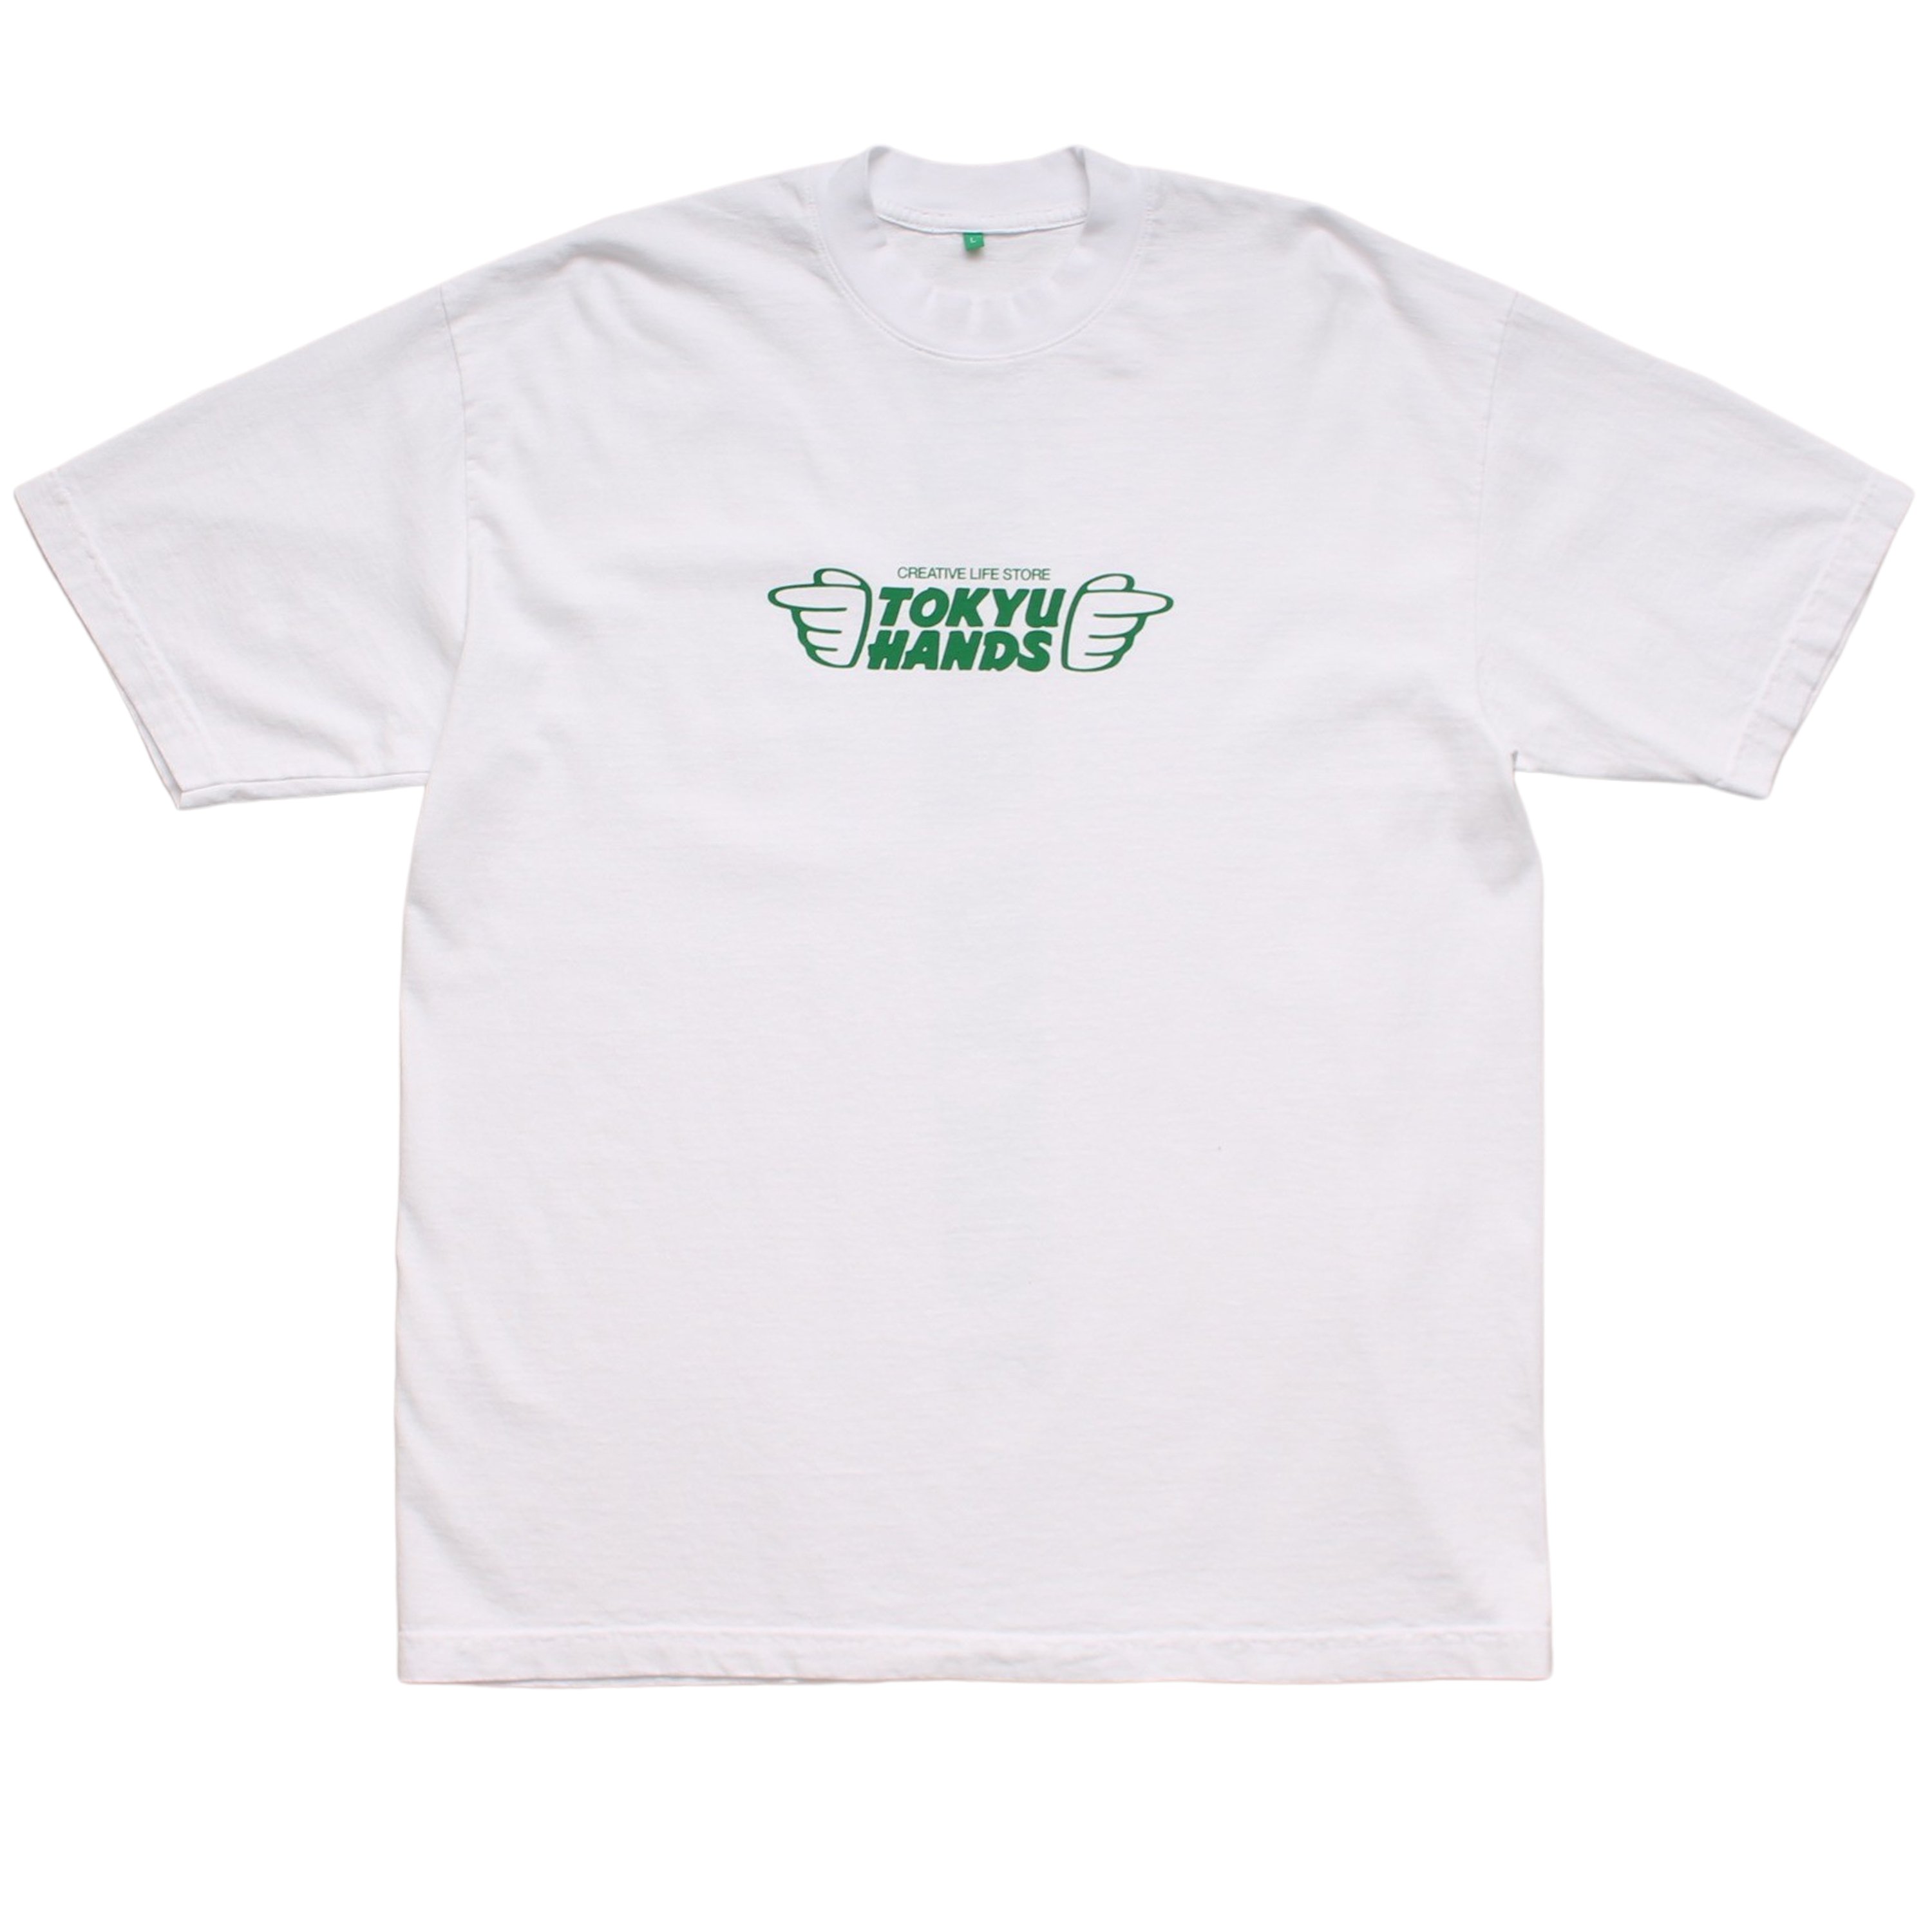 Hands T-Shirt【WHITE】 - TOKYO ONLINE SHOP